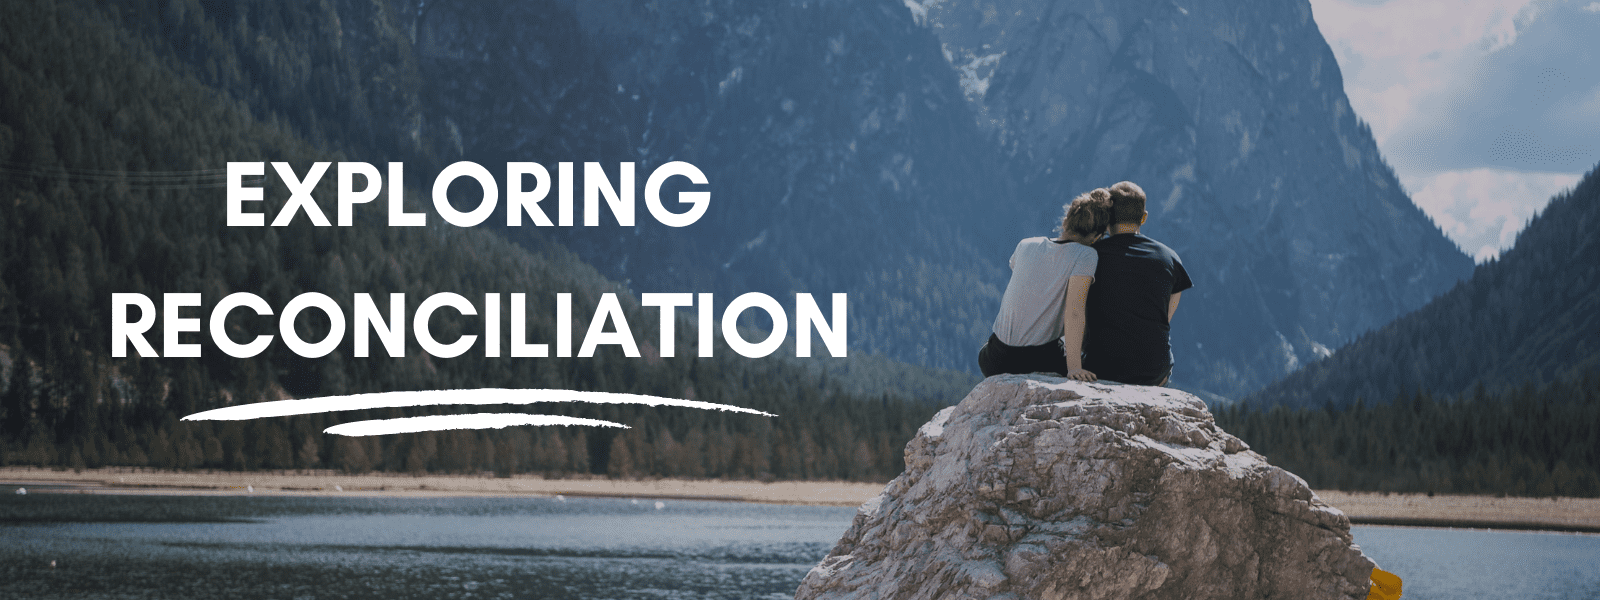 exploring reconciliation course